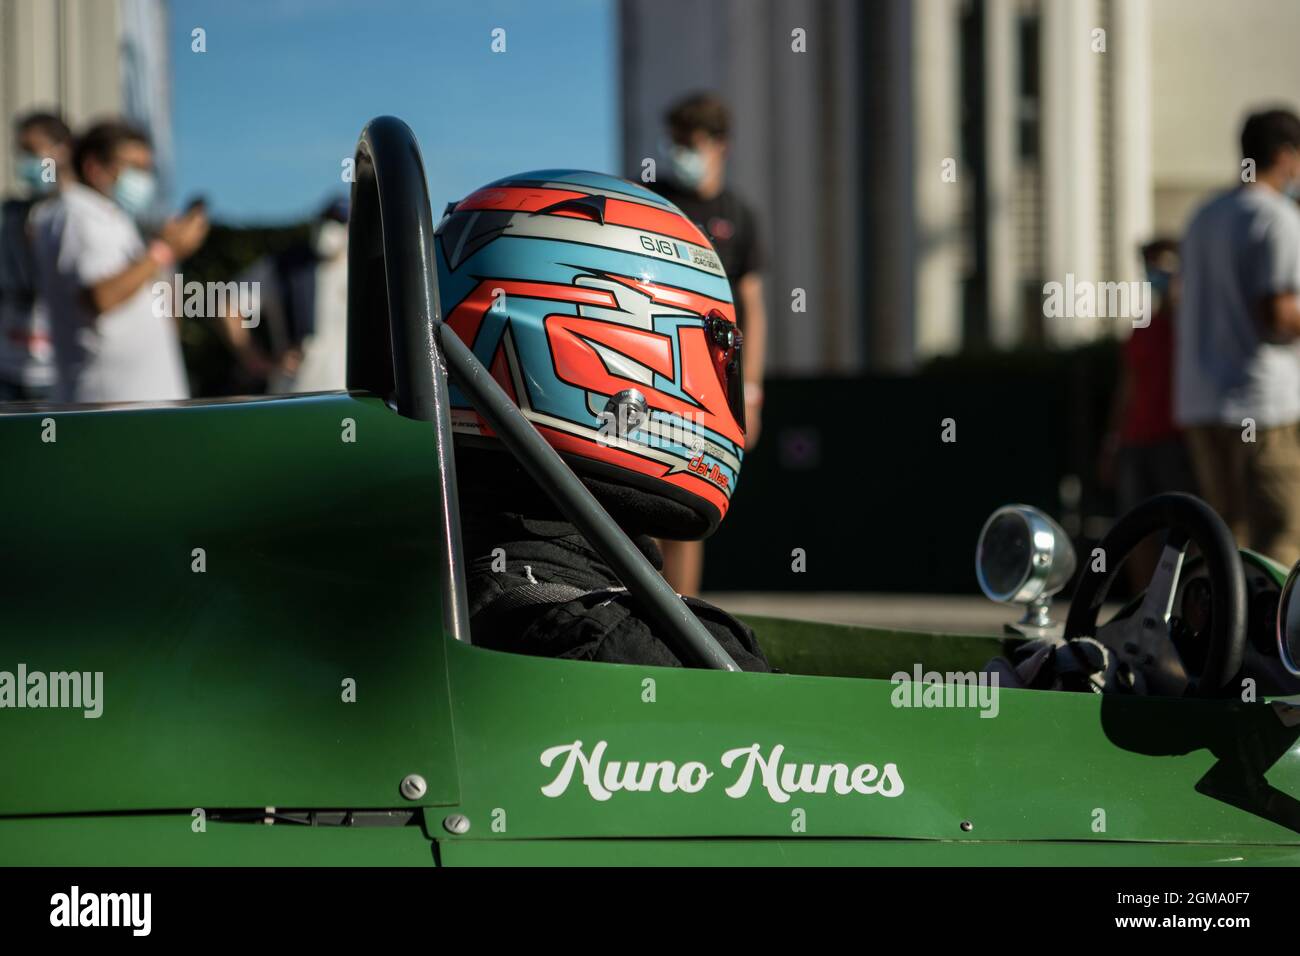 Caramulo, Portugal - 04 September 2021: Portuguese driver in his green racing car in Caramulo Motorfestival 2021 Stock Photo